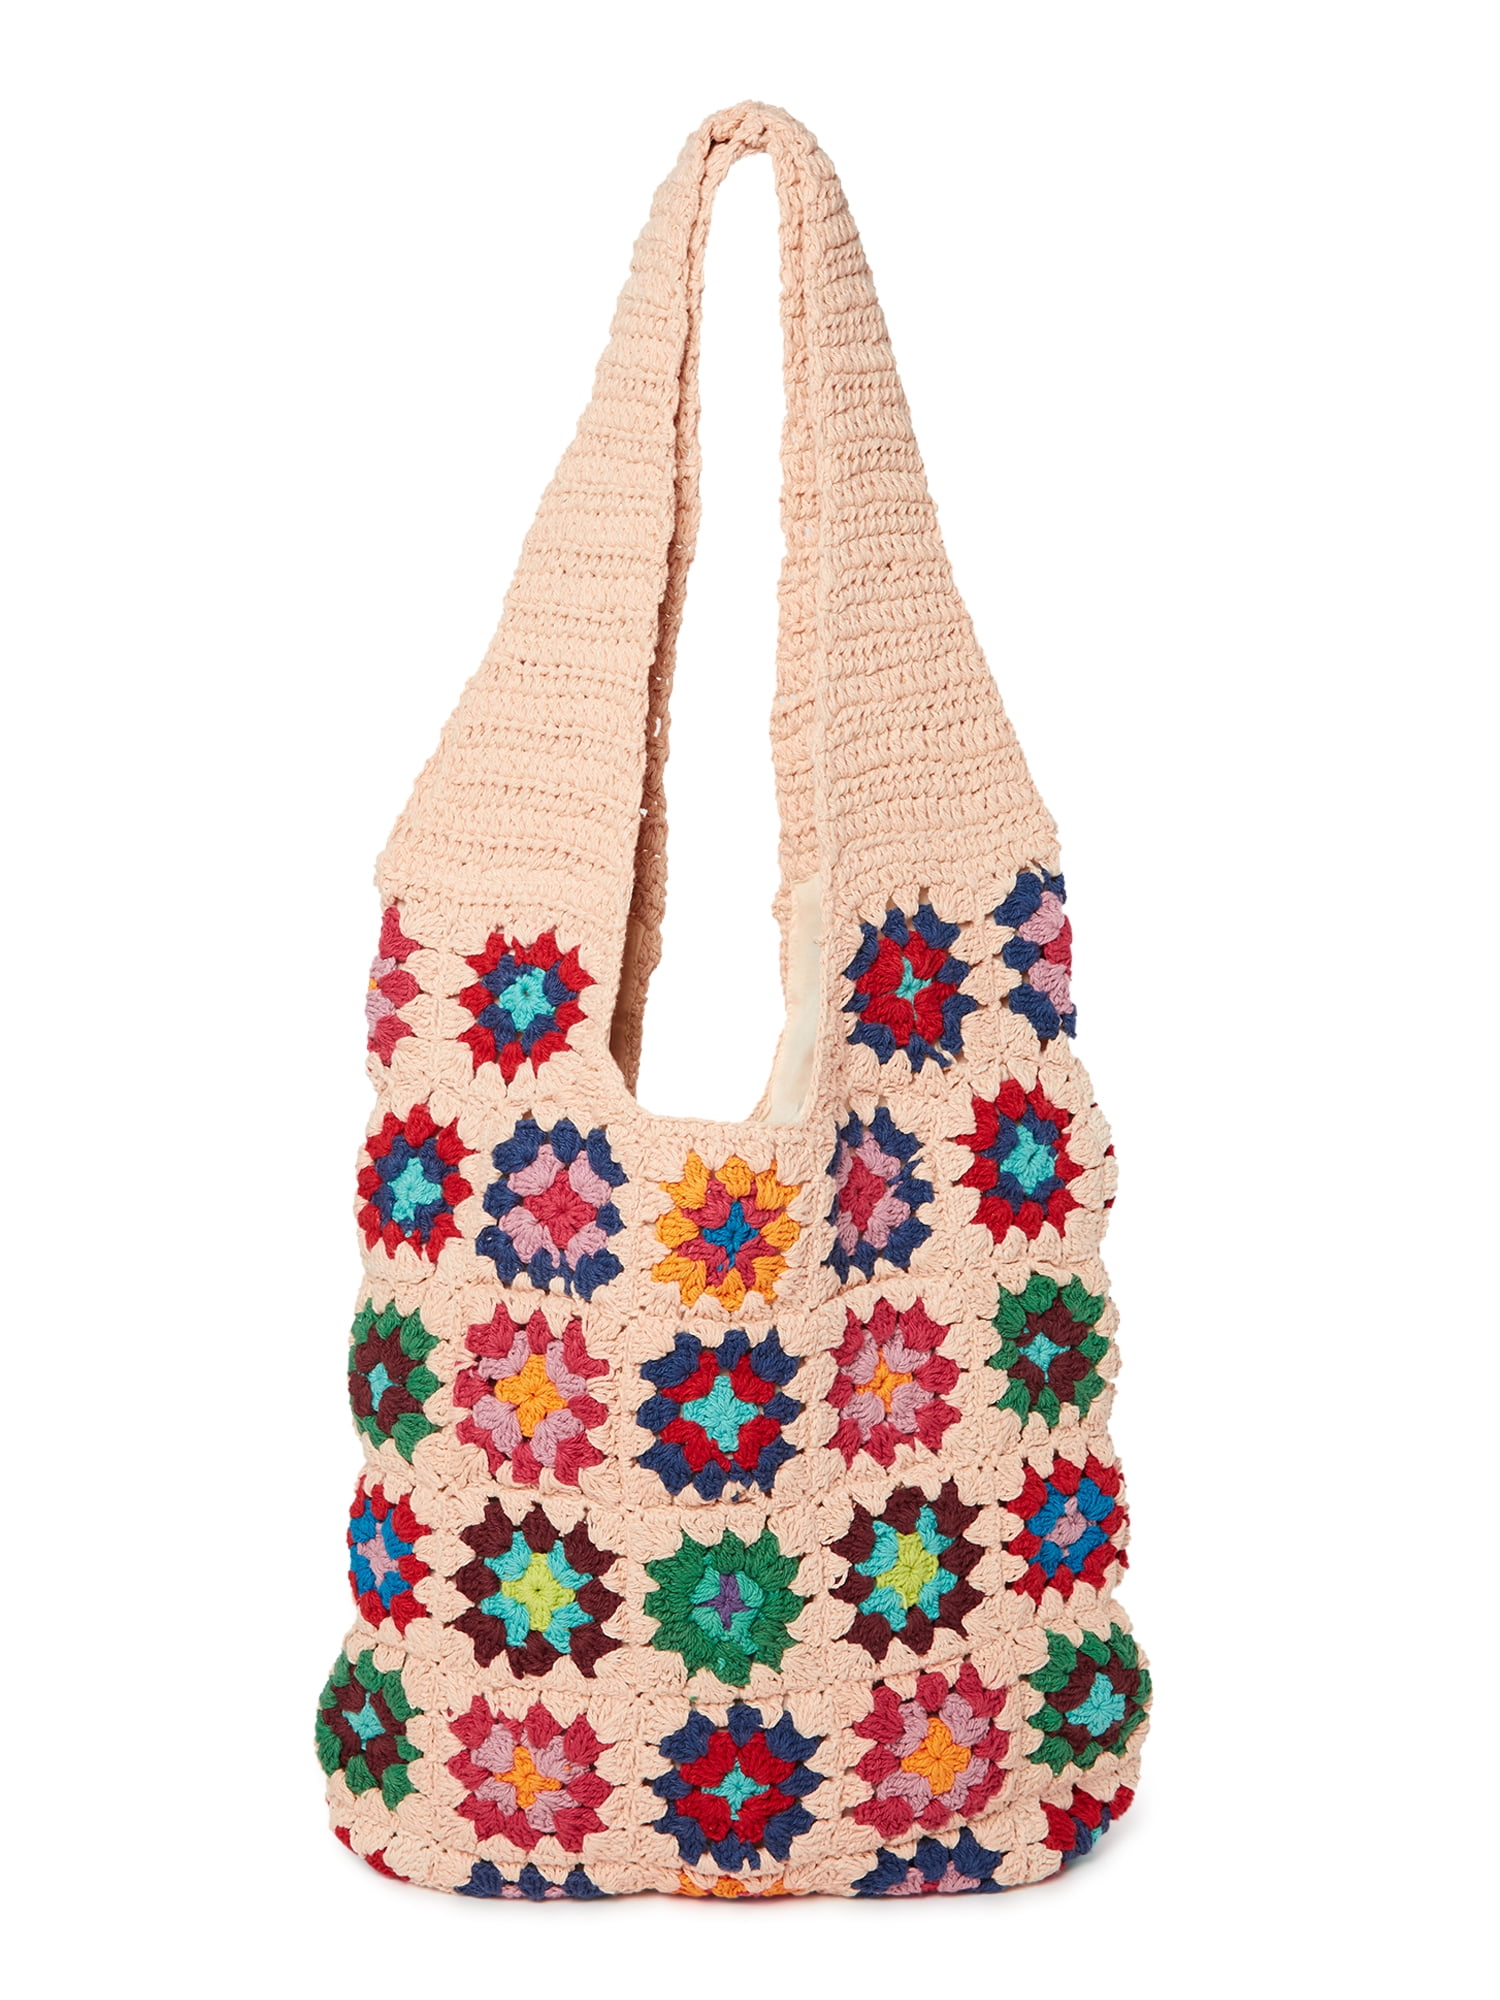 Beige handbag and white application Crochet bag Women's bag Handmade Made in Italy Women's accessory